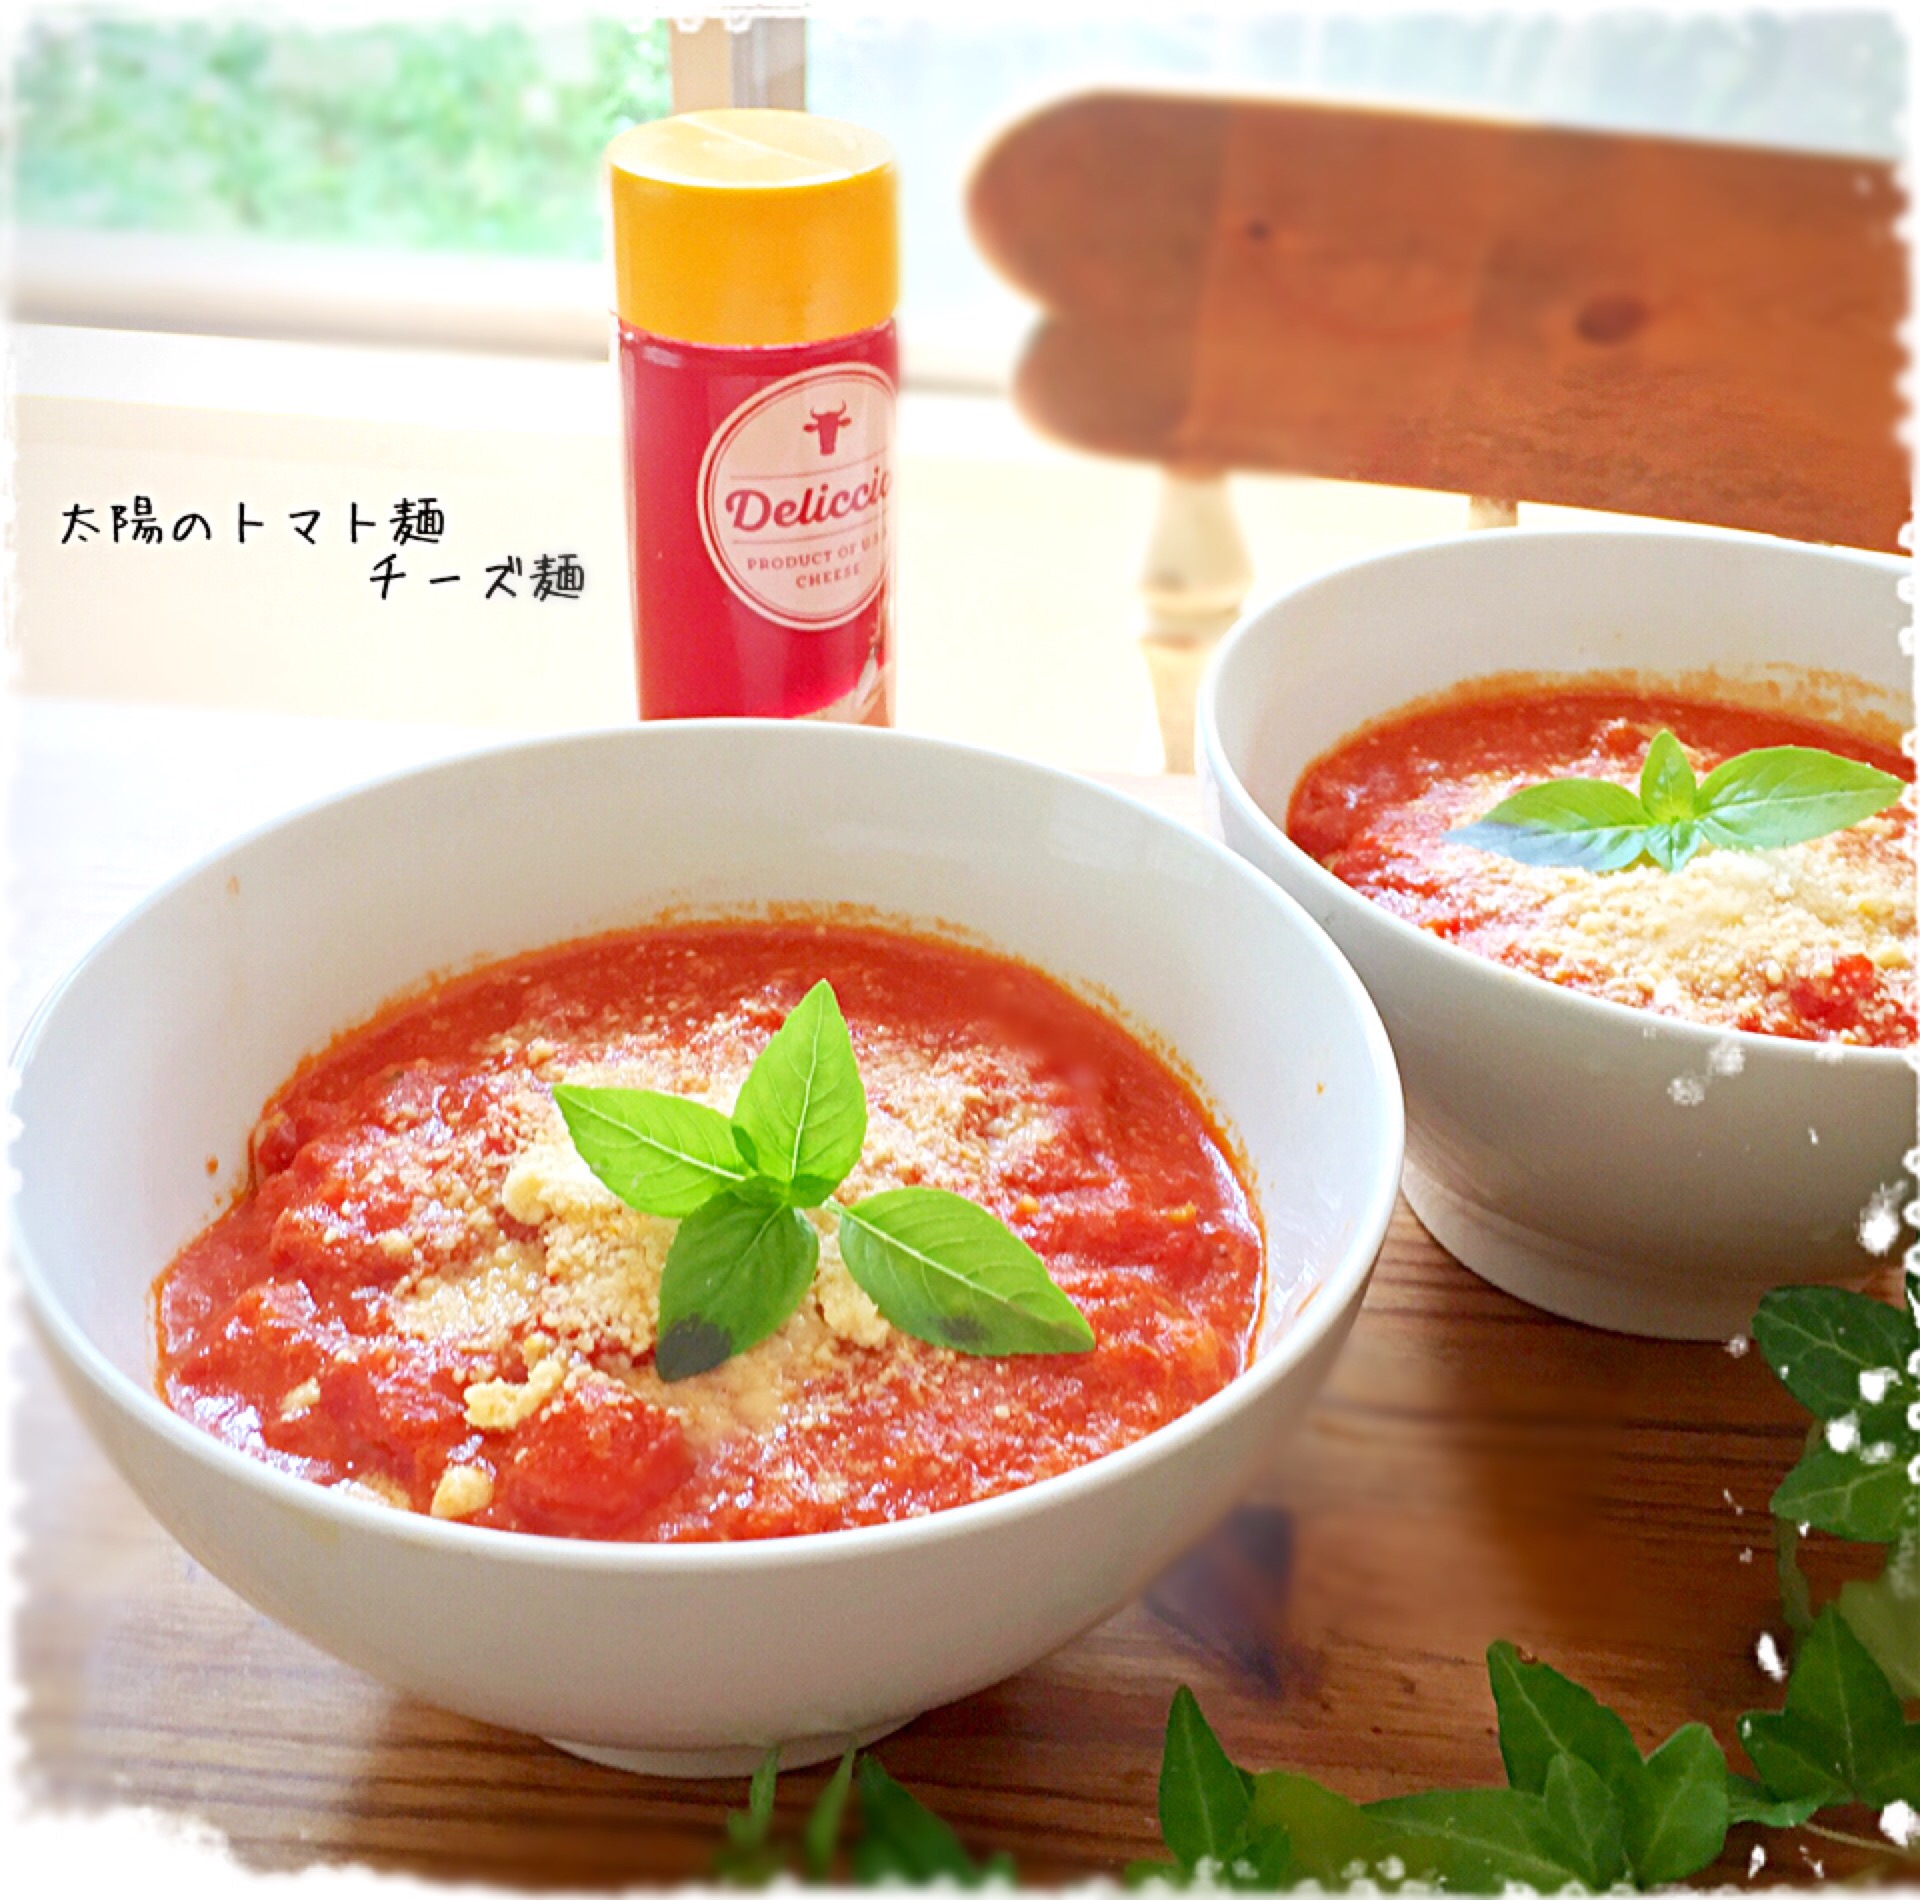 chiaki3さんの料理 太陽のトマト麺 チーズ麺 お店で食べた味を 出前一丁で再現??